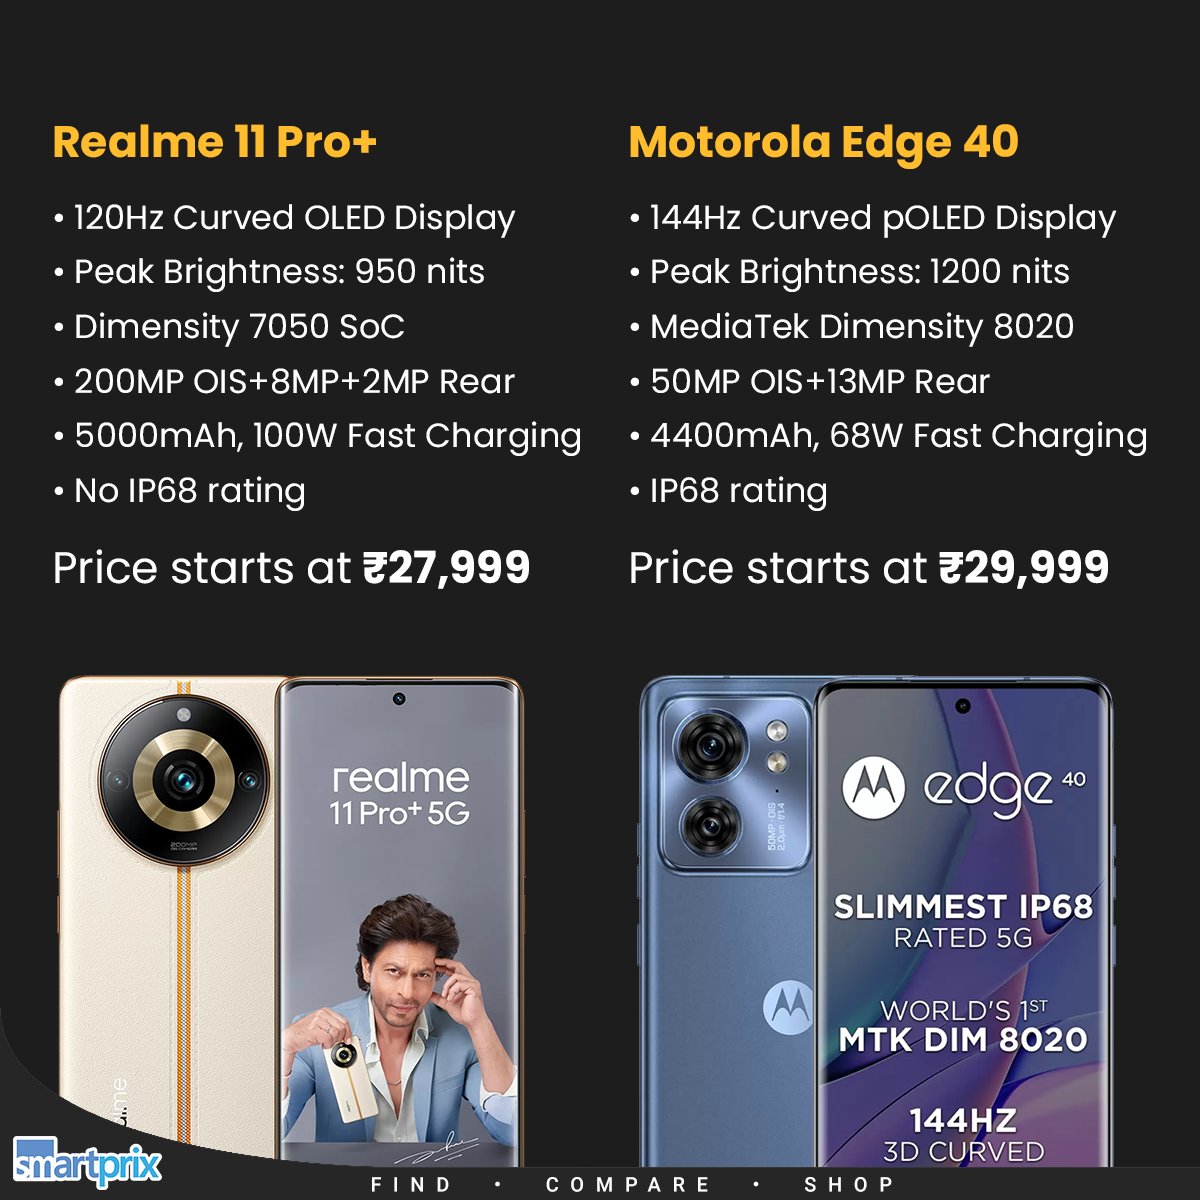 Next-Level Rivalry: Motorola Edge 40 vs Realme 11 Pro+ smpx.to/kg2RoX

#Realme #Motorola #realme11ProSeries5G
#realme11ProPlus5G
#MotorolaEdge40